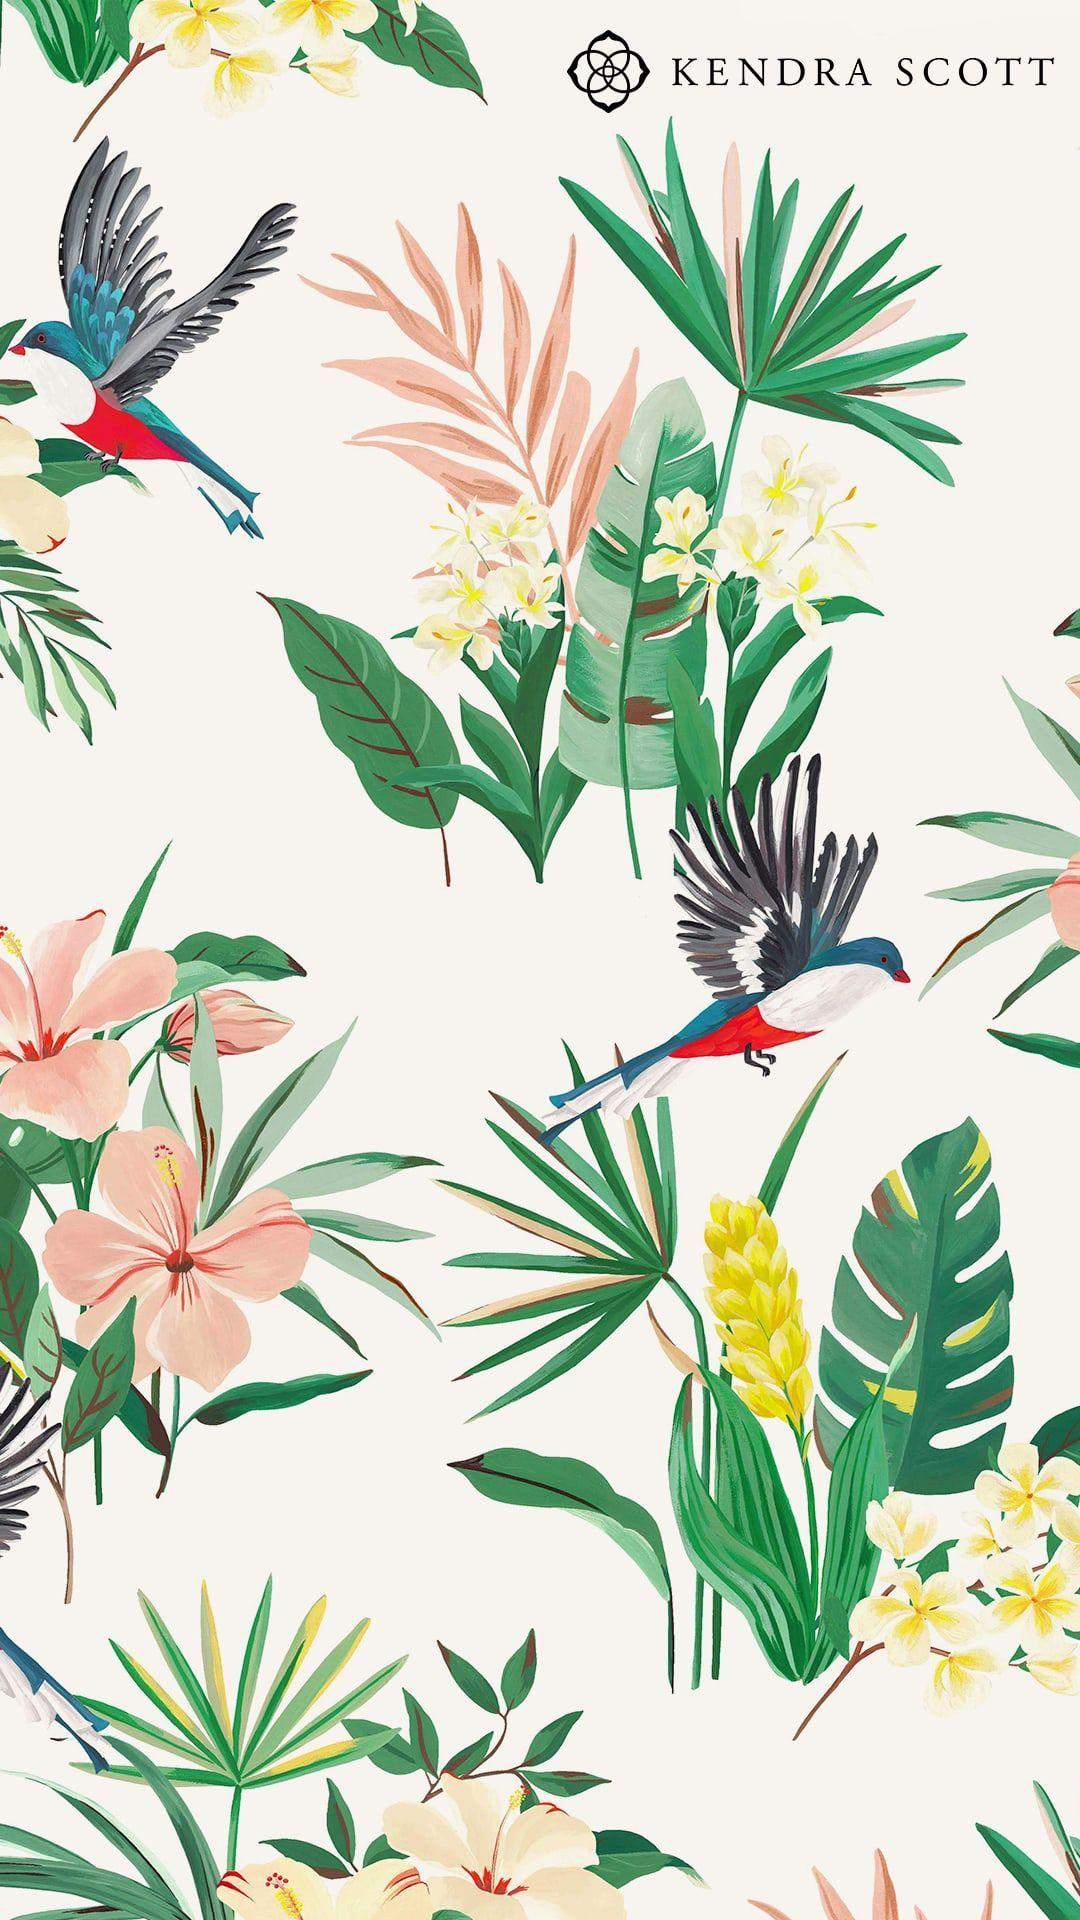 Kendra Scott Summer 2018 Wallpaper. Plant wallpaper, iPhone background pattern, Prints